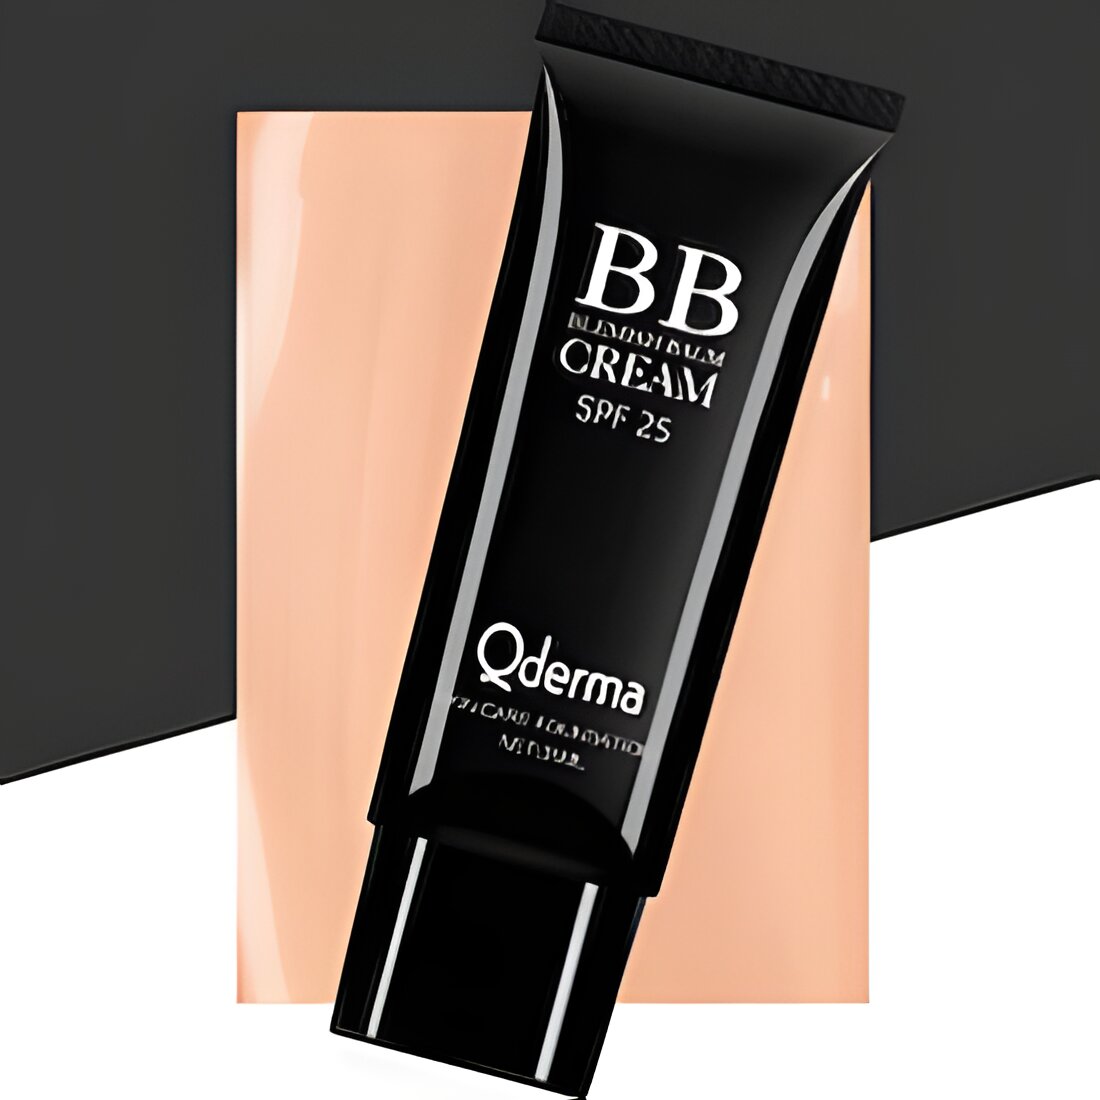 Free Qderma BB Cream SPF 25 Sample